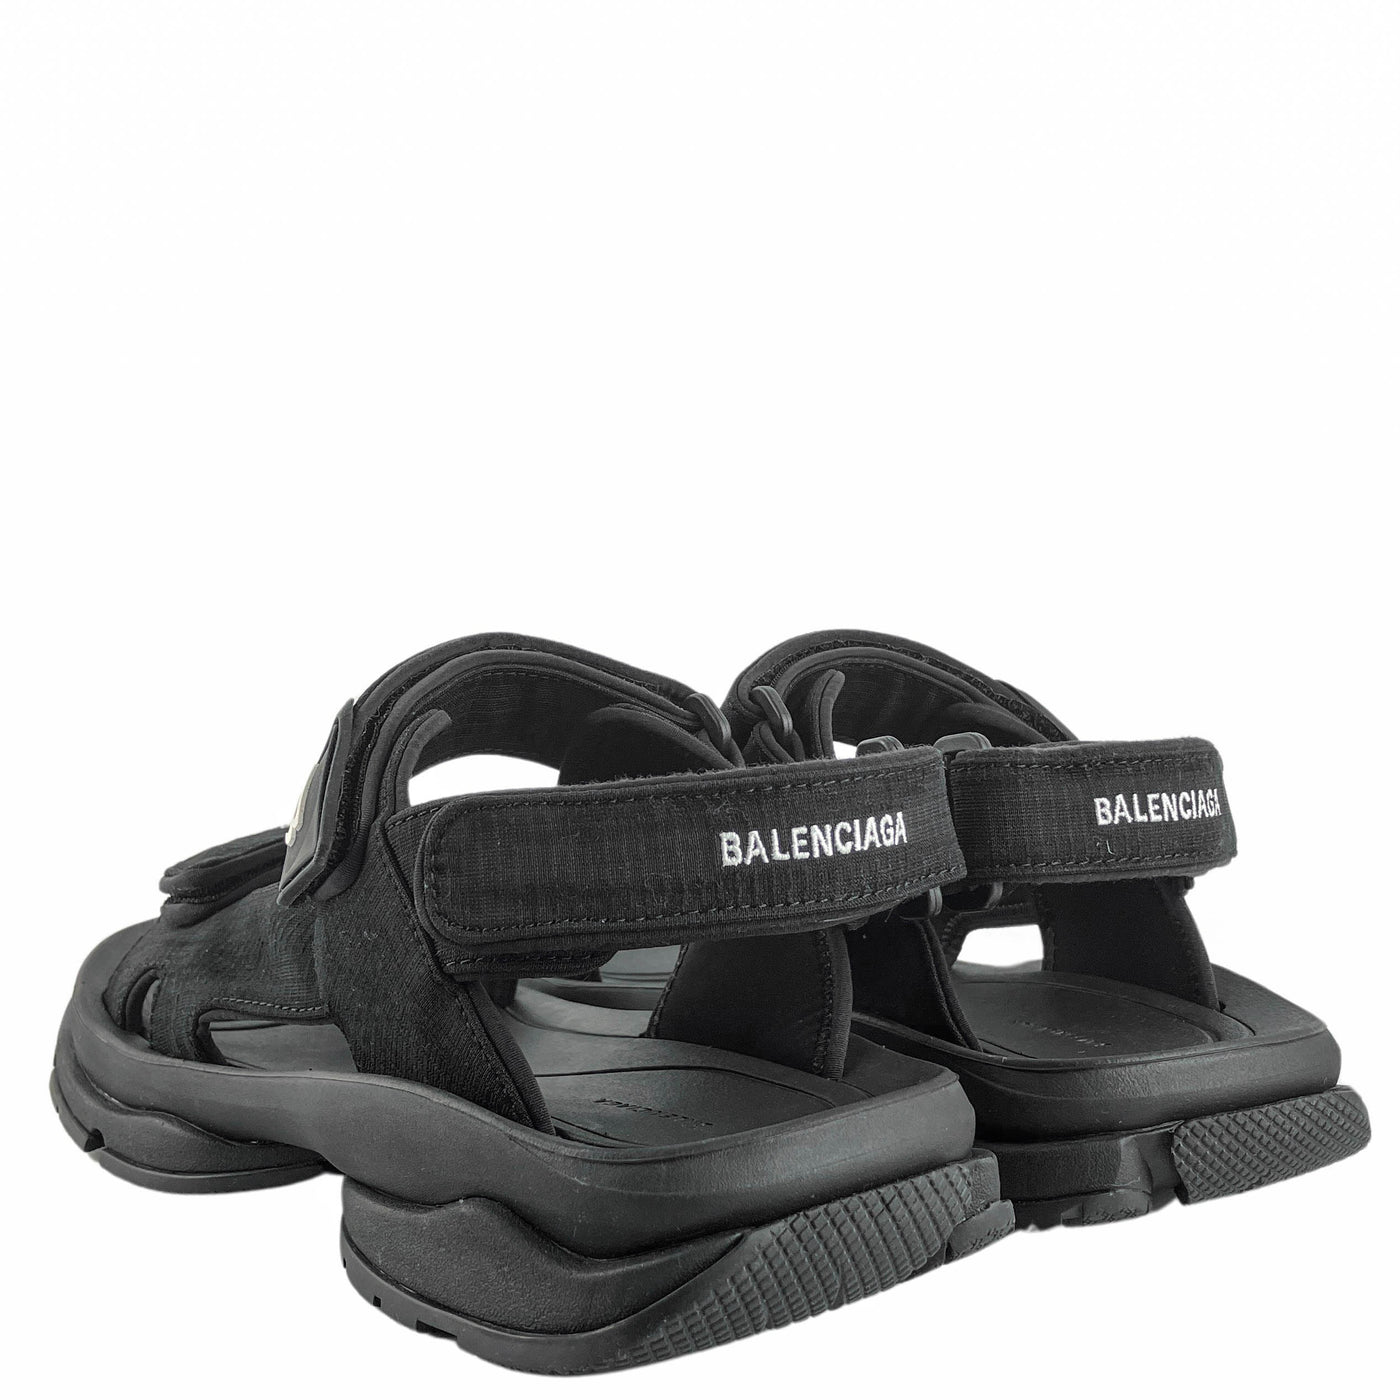 Balenciaga Tourist Sandal in Black - Discounts on Balenciaga at UAL